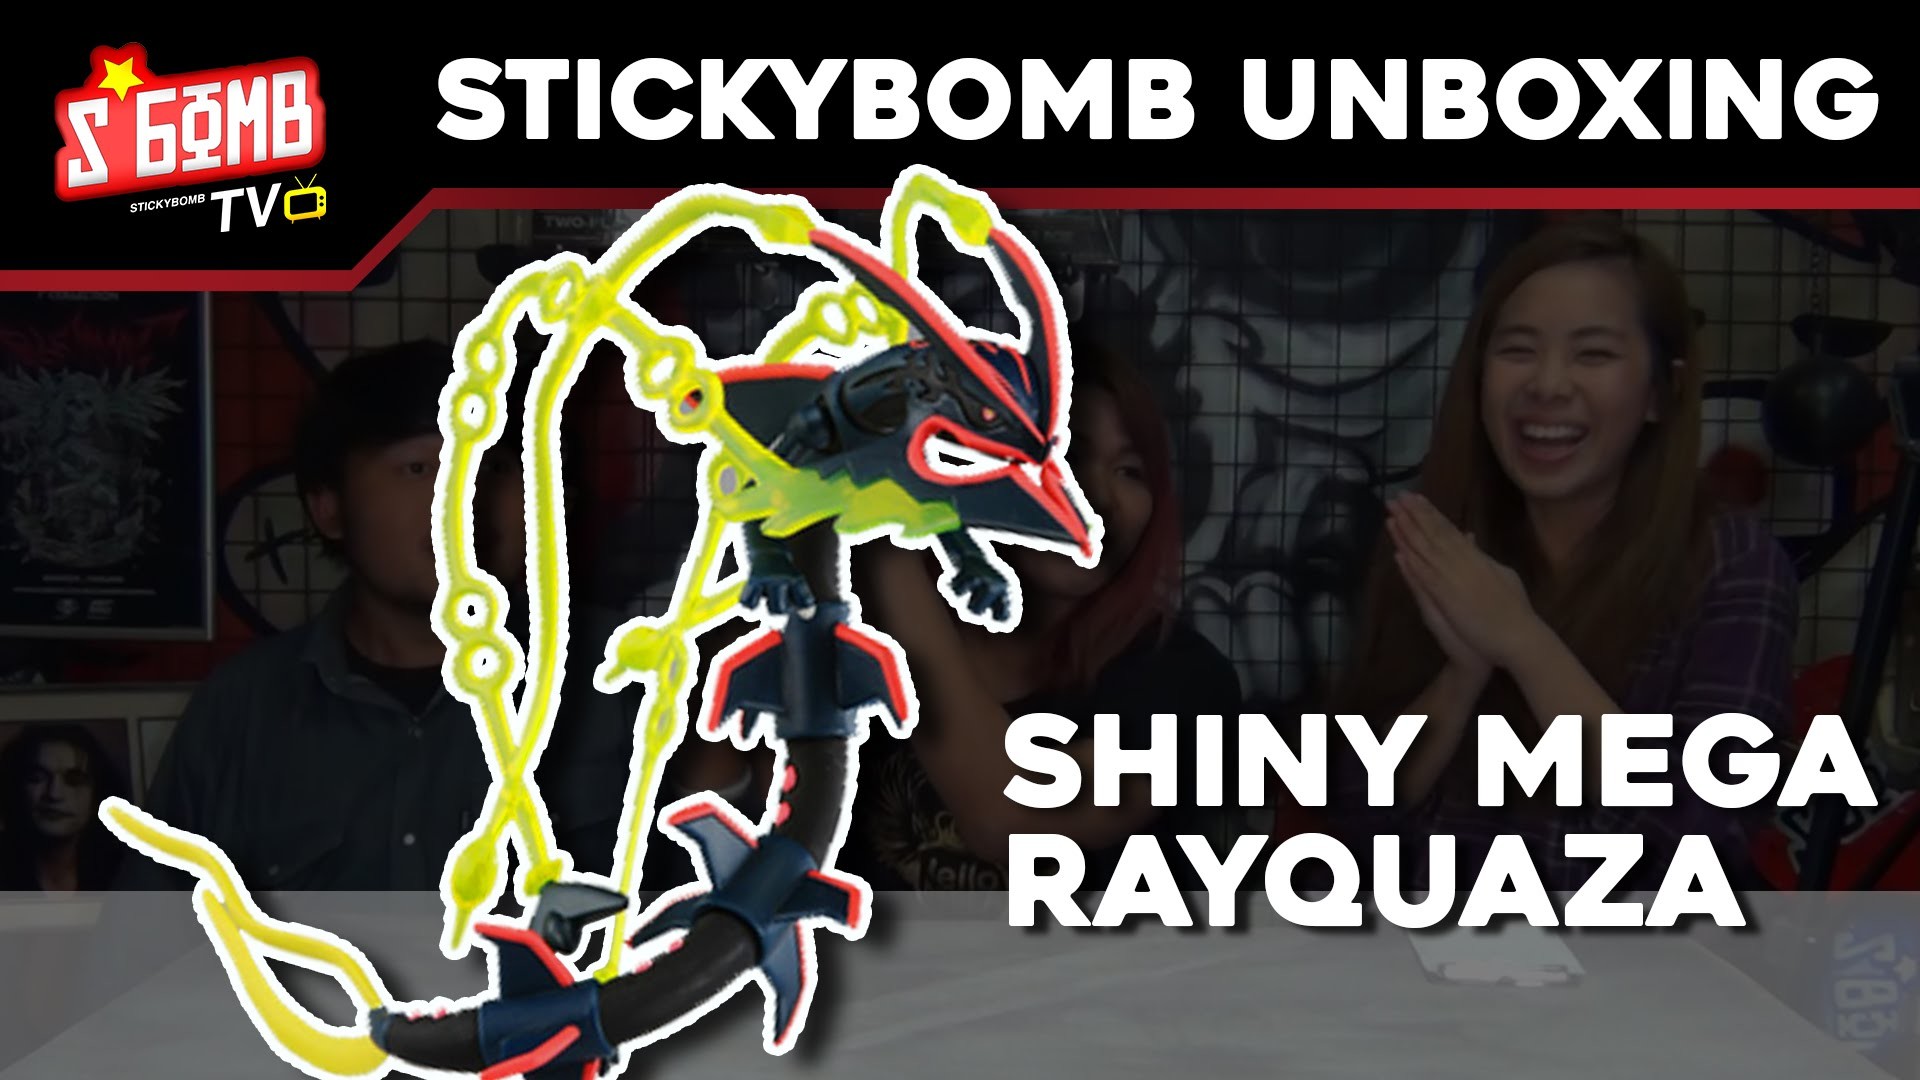 1920x1080 StickyBomb Unboxing - à¹à¸à¸°à¸à¸¥à¹à¸­à¸ Pokemon "Mega Shiny Rayquaza" Figure -  YouTube